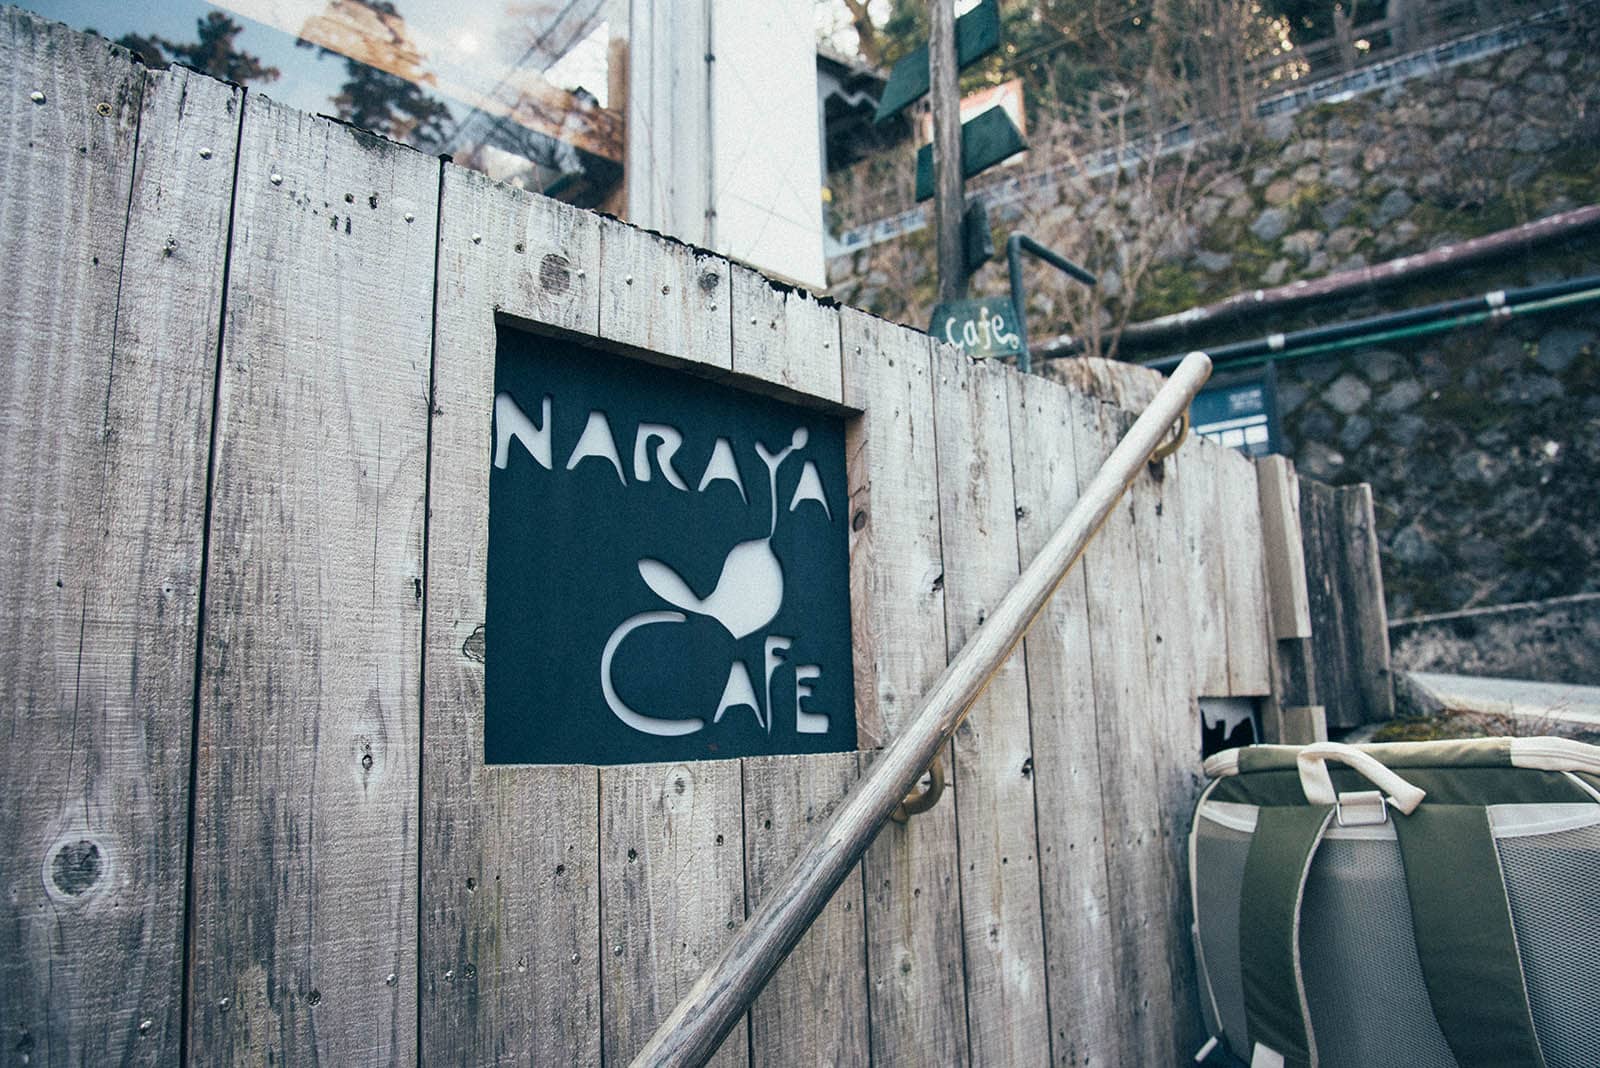 NARAYA CAFEの看板